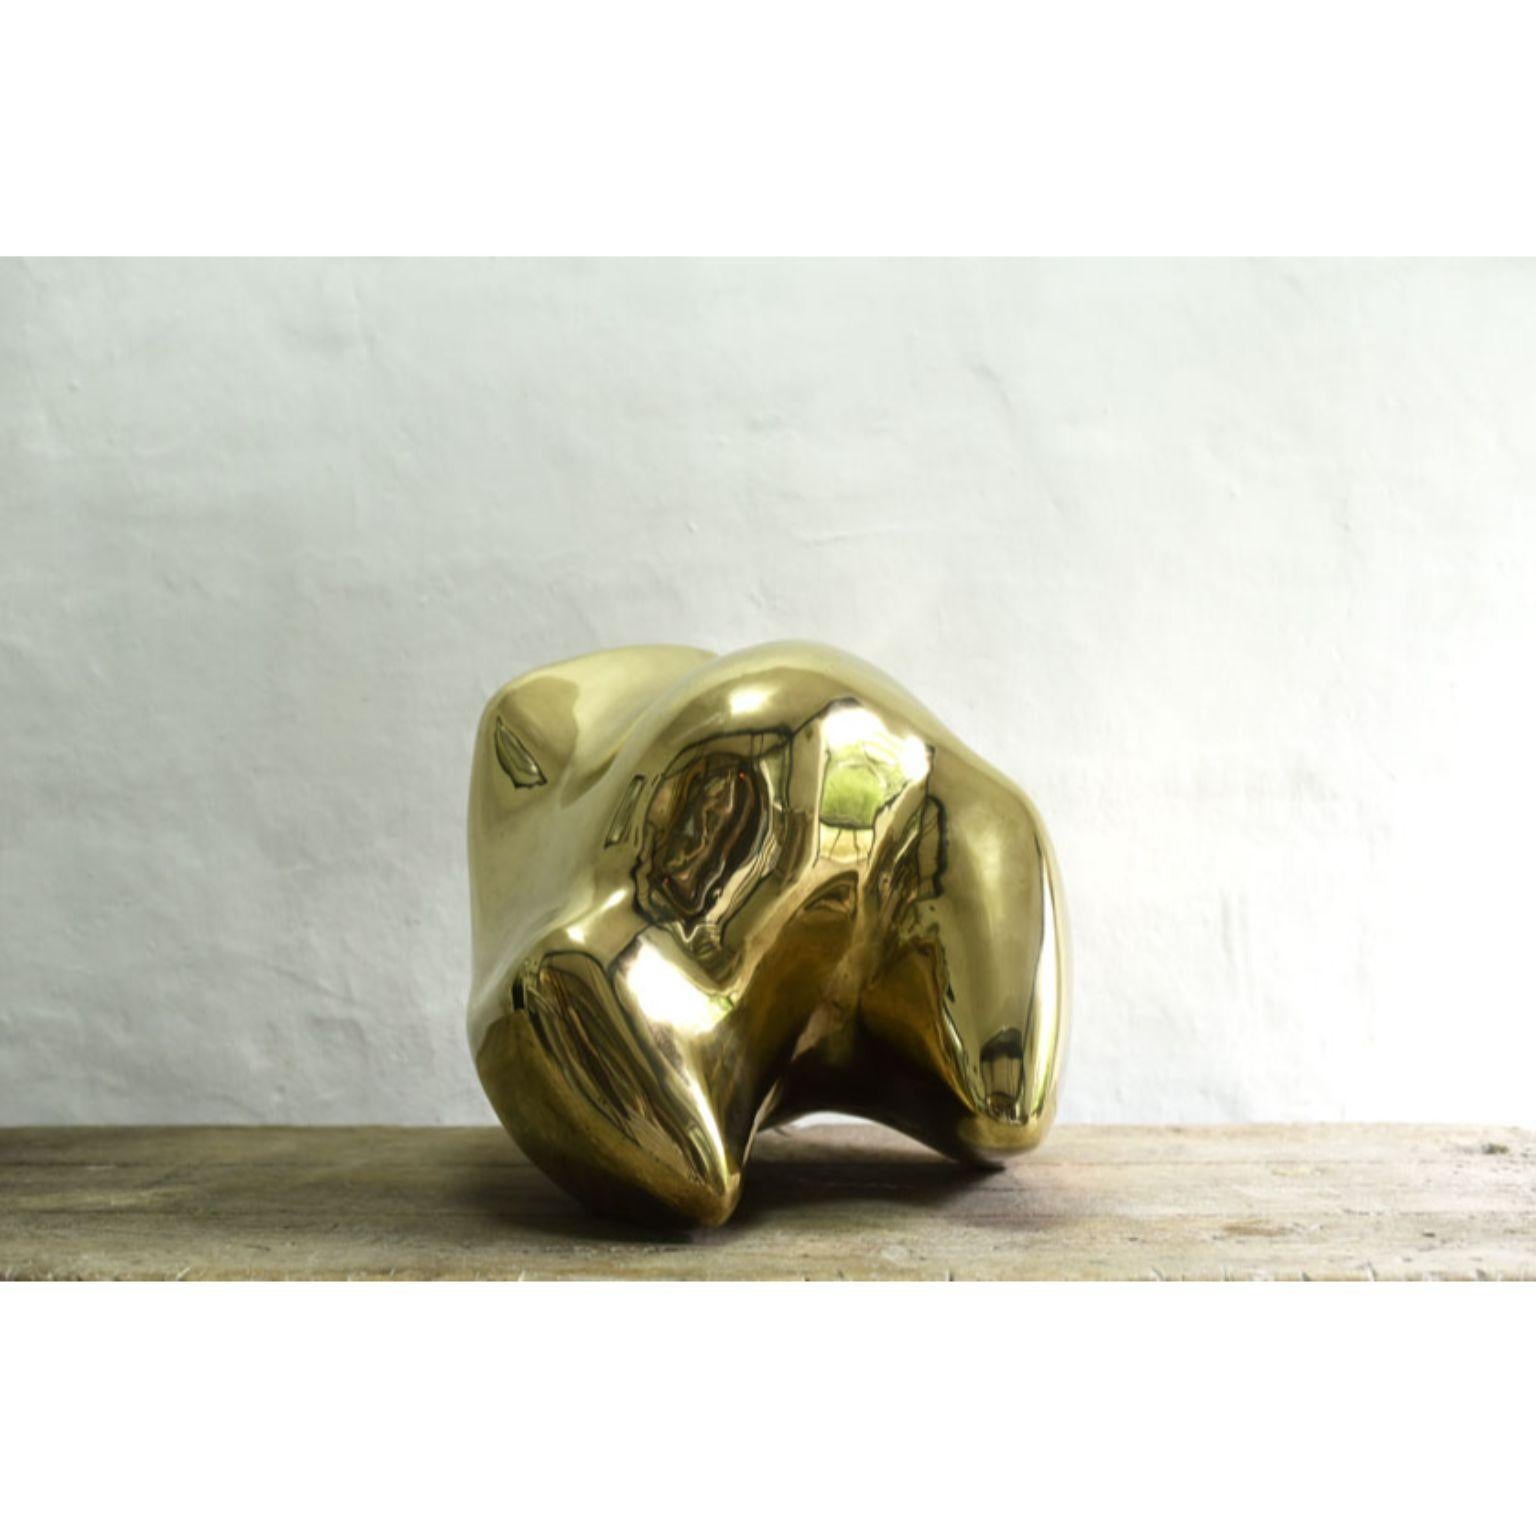 Yann Barrere - Grande L1 - Original-Skulptur
Abmessungen: 58 x 62 x 62 cm 
Materialien: Bronze

